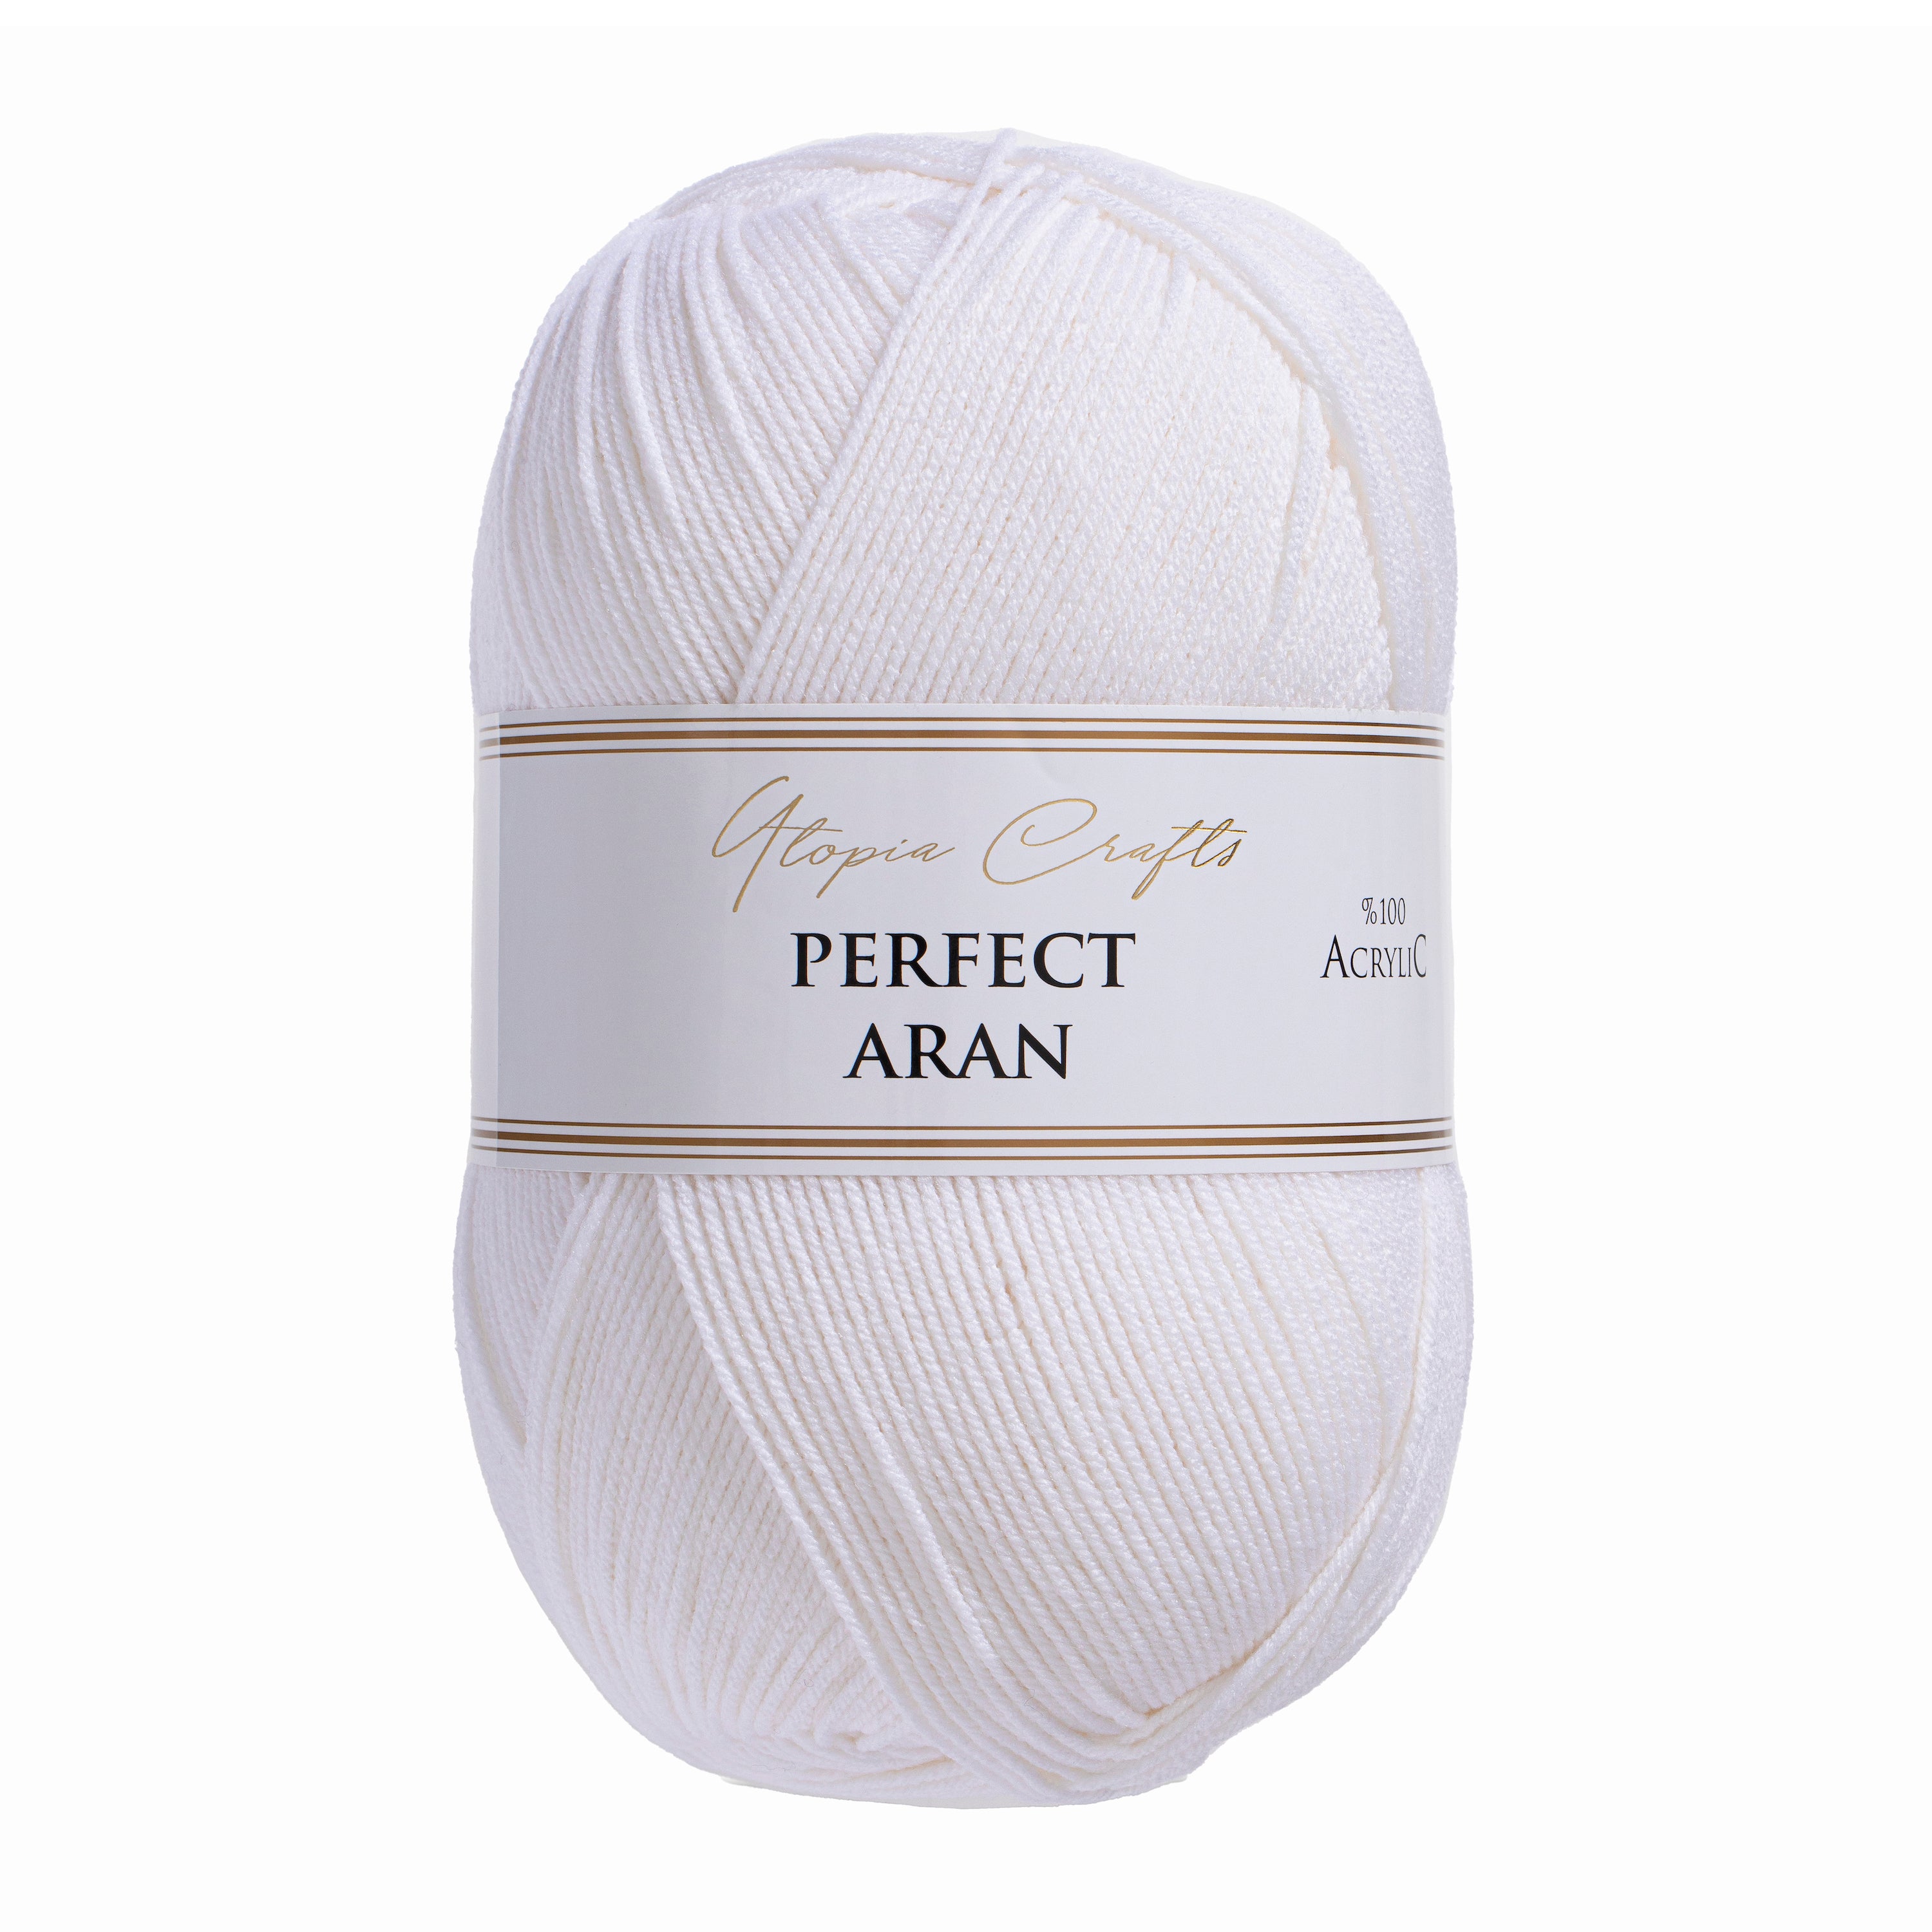 Utopia Crafts Aran Knitting and Crochet Yarn, 400g [White]